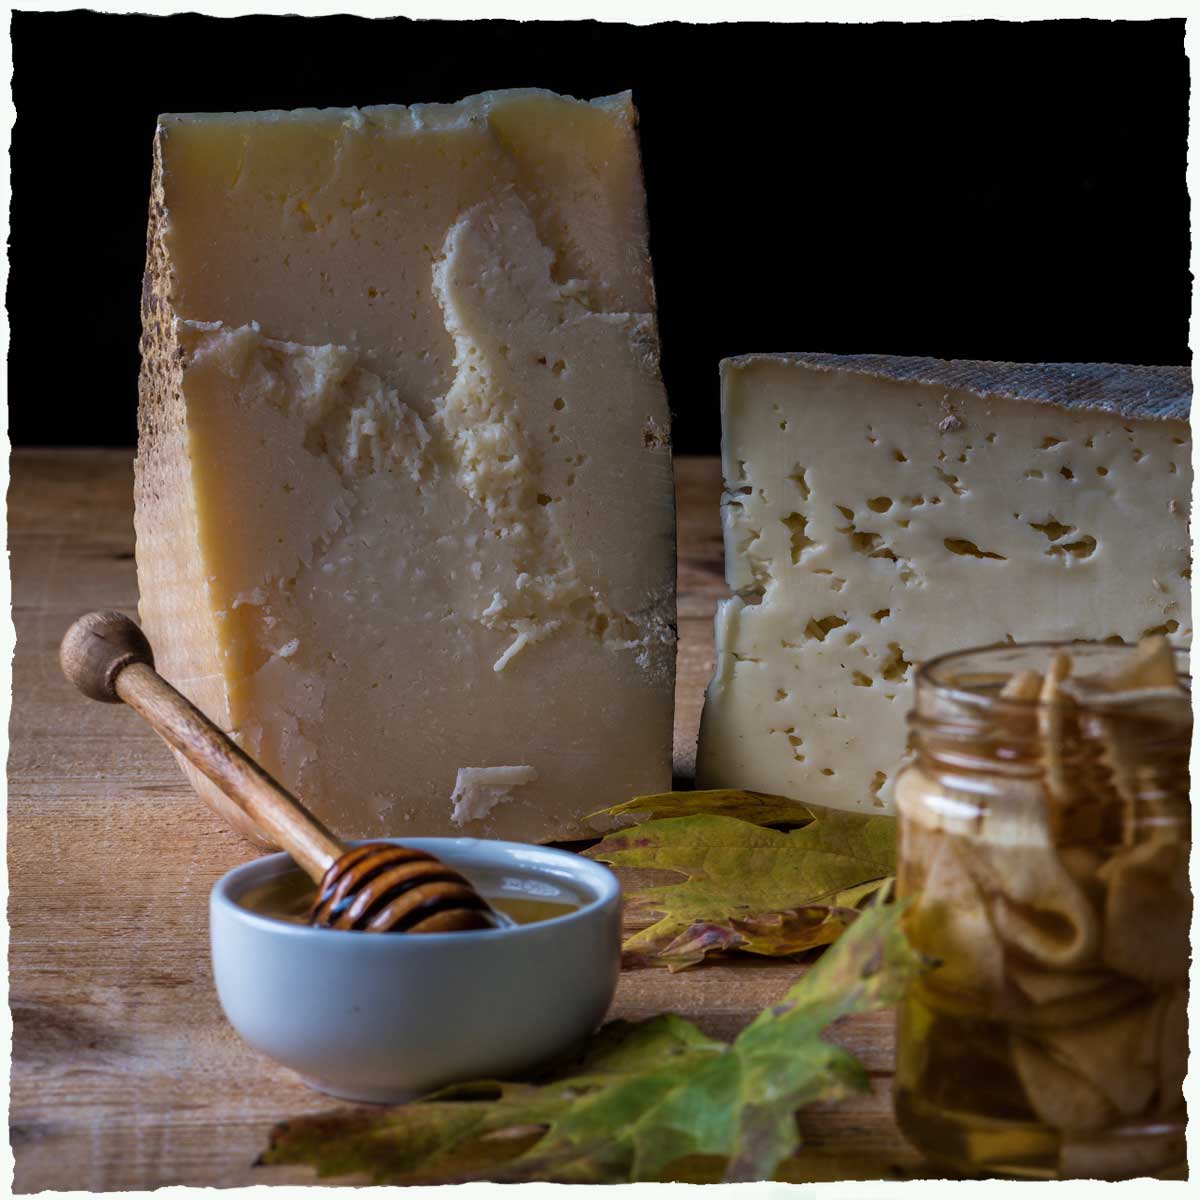 Formaggi delle malghe della Lessinia con miele, marmellate e mostarde fatte in casa | Our Cheese selection from the dairies of Lessinia with honey, homemade jams and mostarda